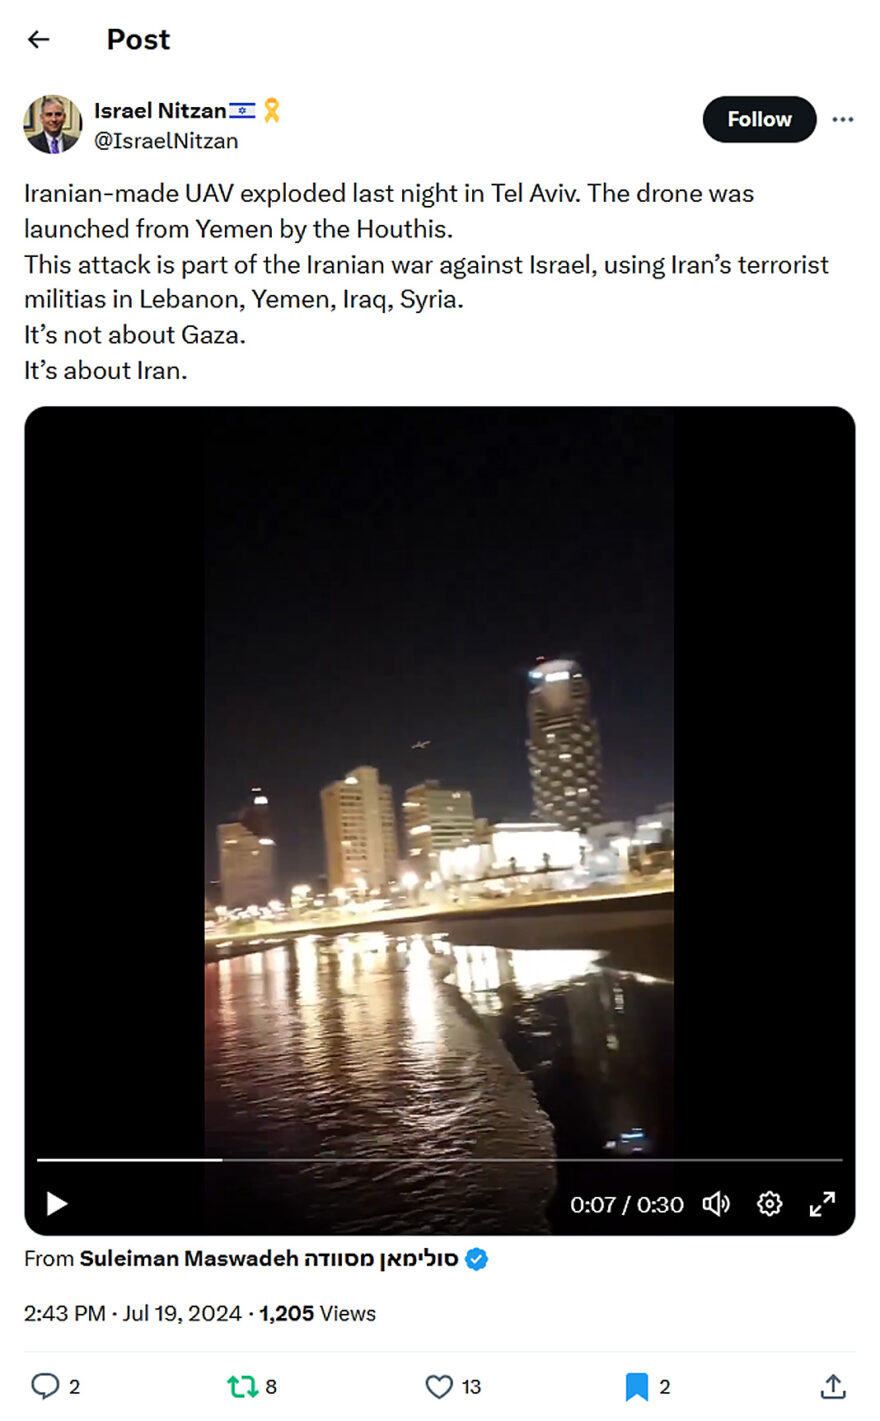 Israel Nitzan-tweet-19July2024-Iranian-made Yemen Houthis UAV exploded last night in Tel Aviv